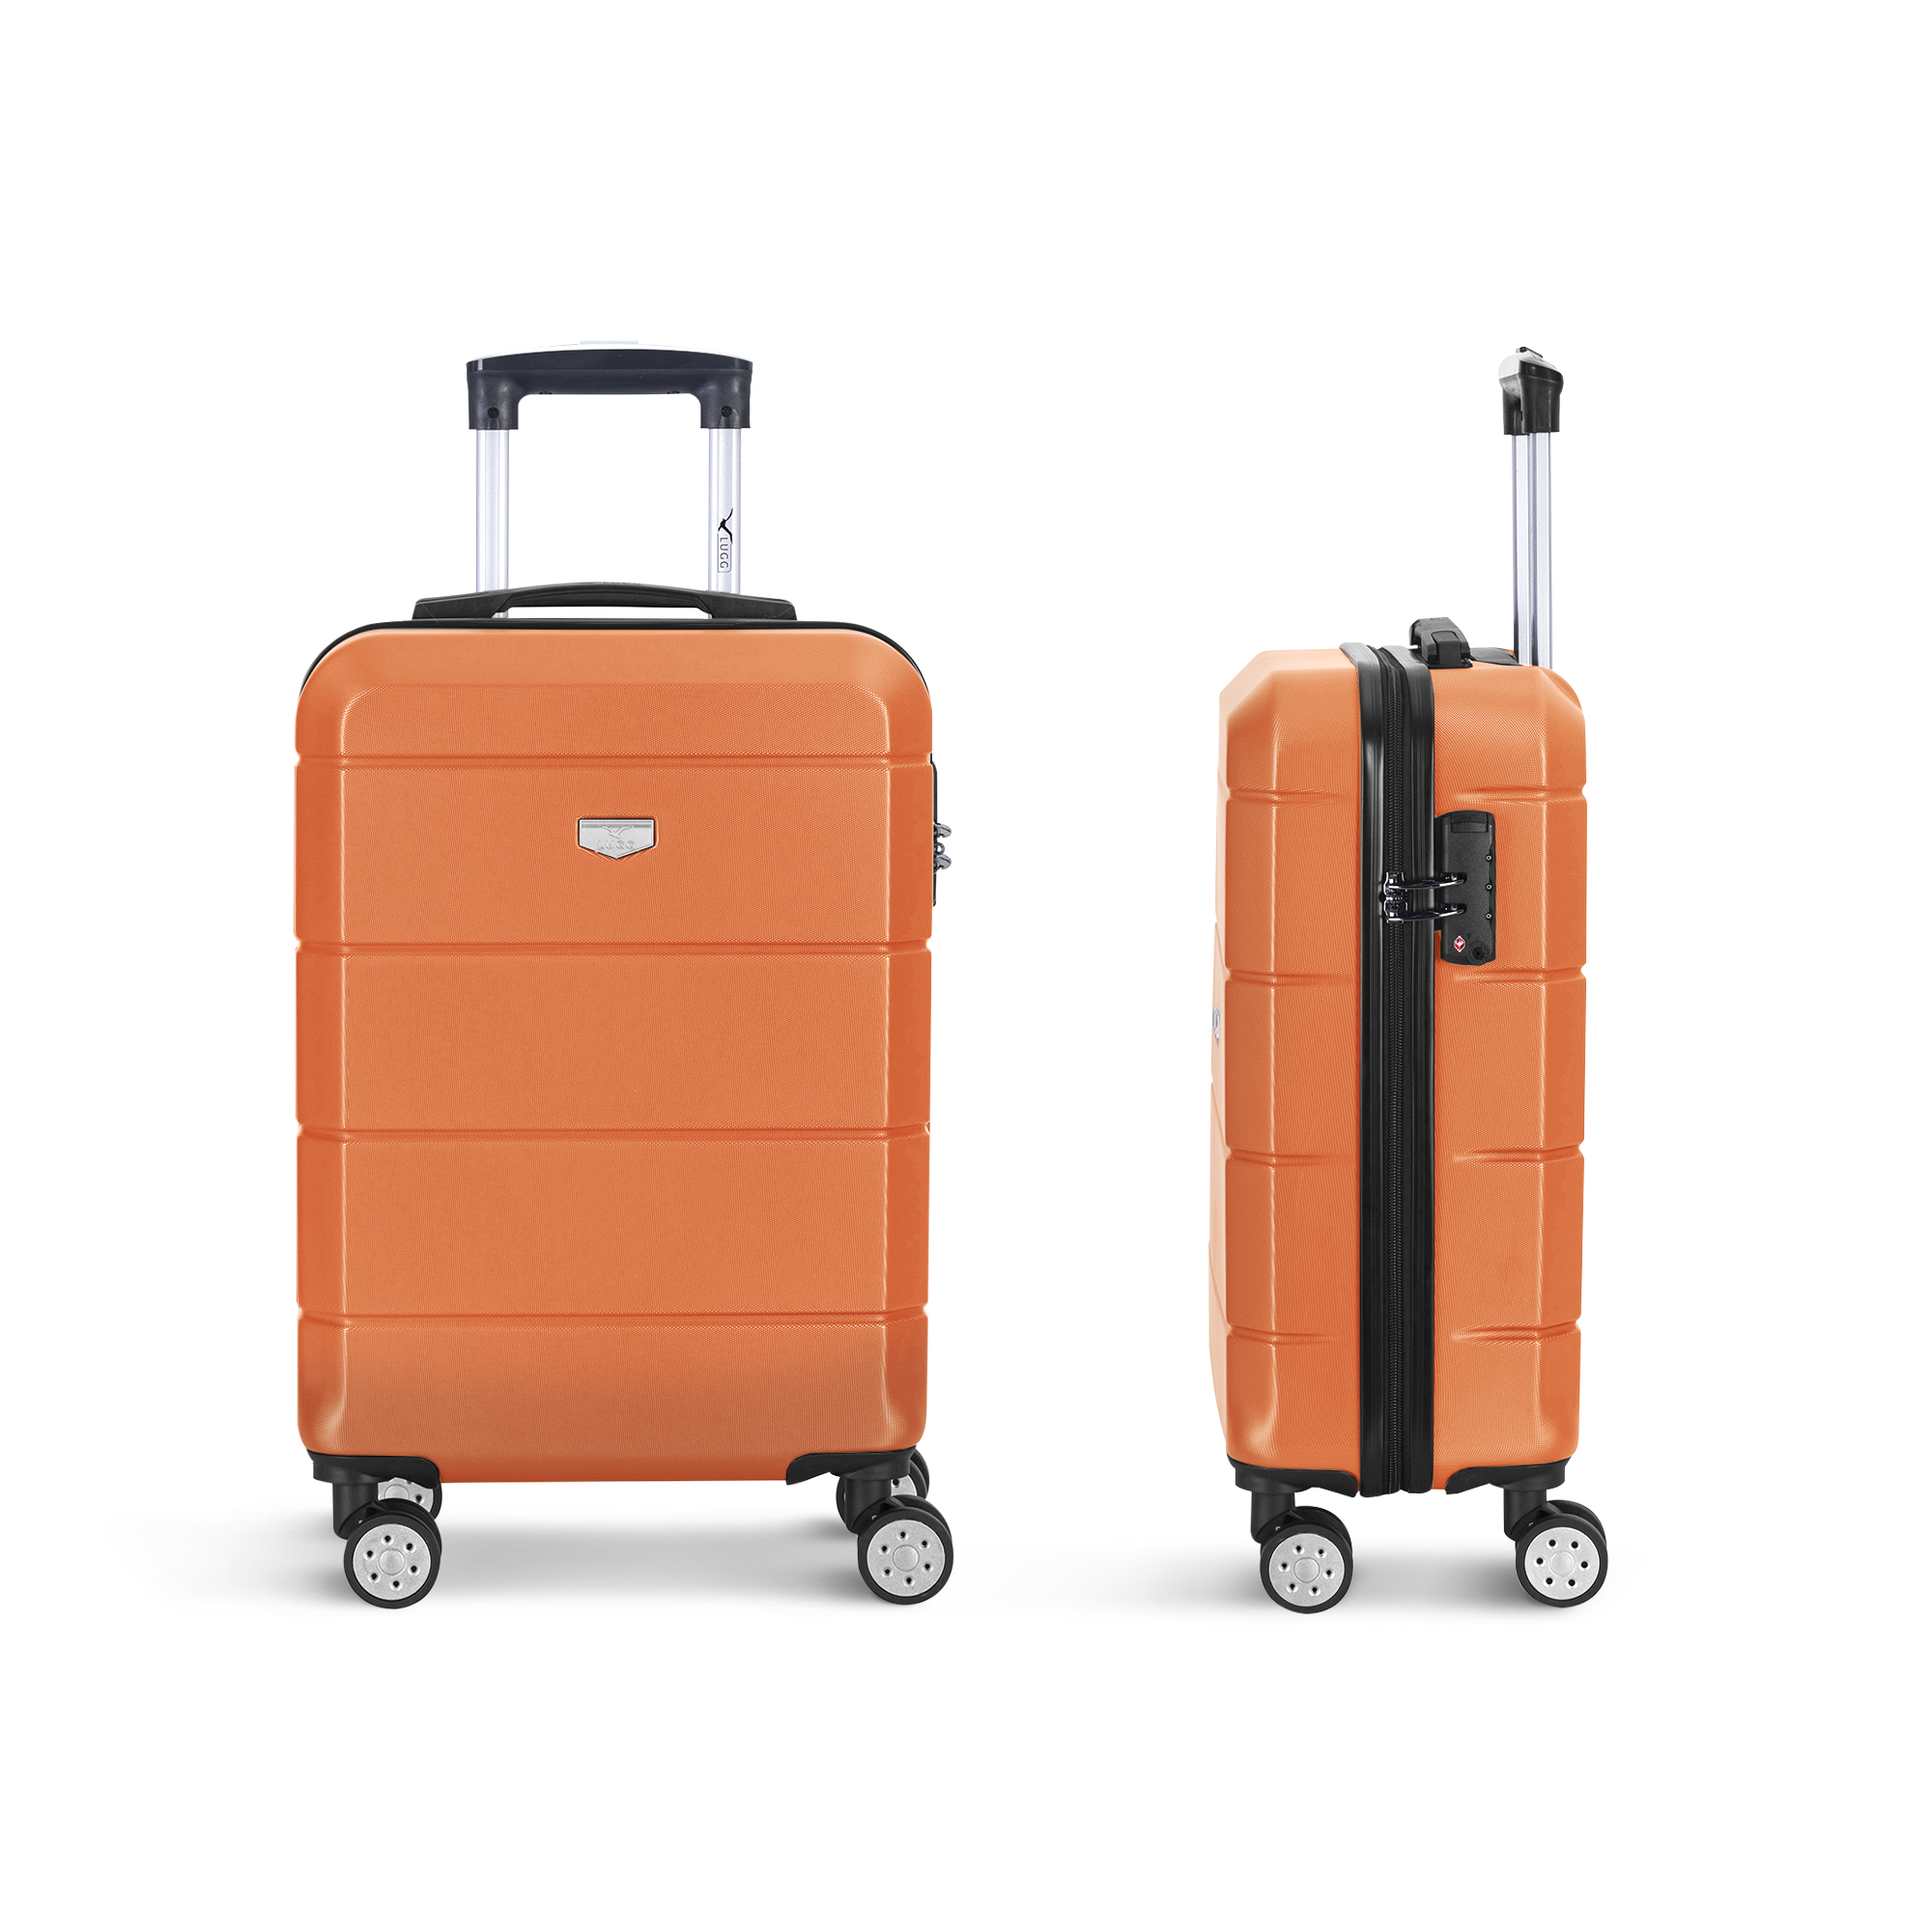 Jetset 20-inch Suitcase in Orange